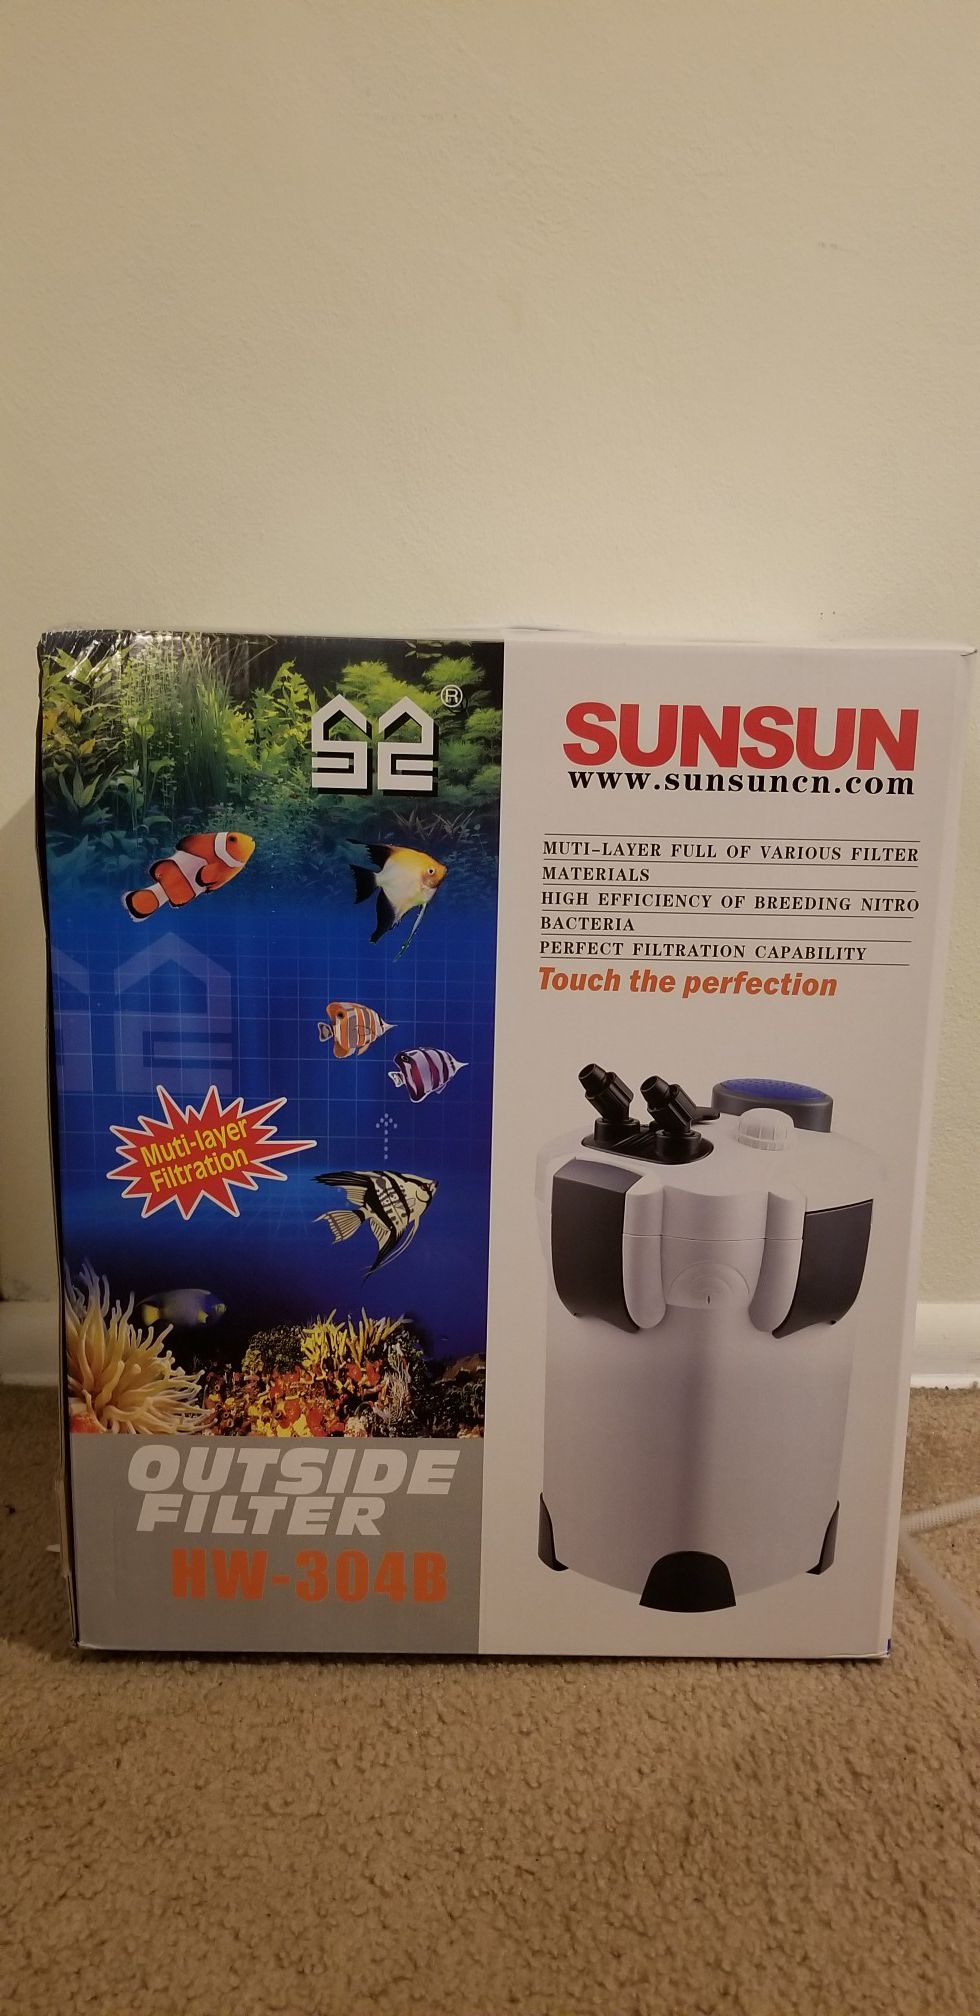 SunSun 304b Canister Filter for Fish Tank/aquarium LIKE NEW